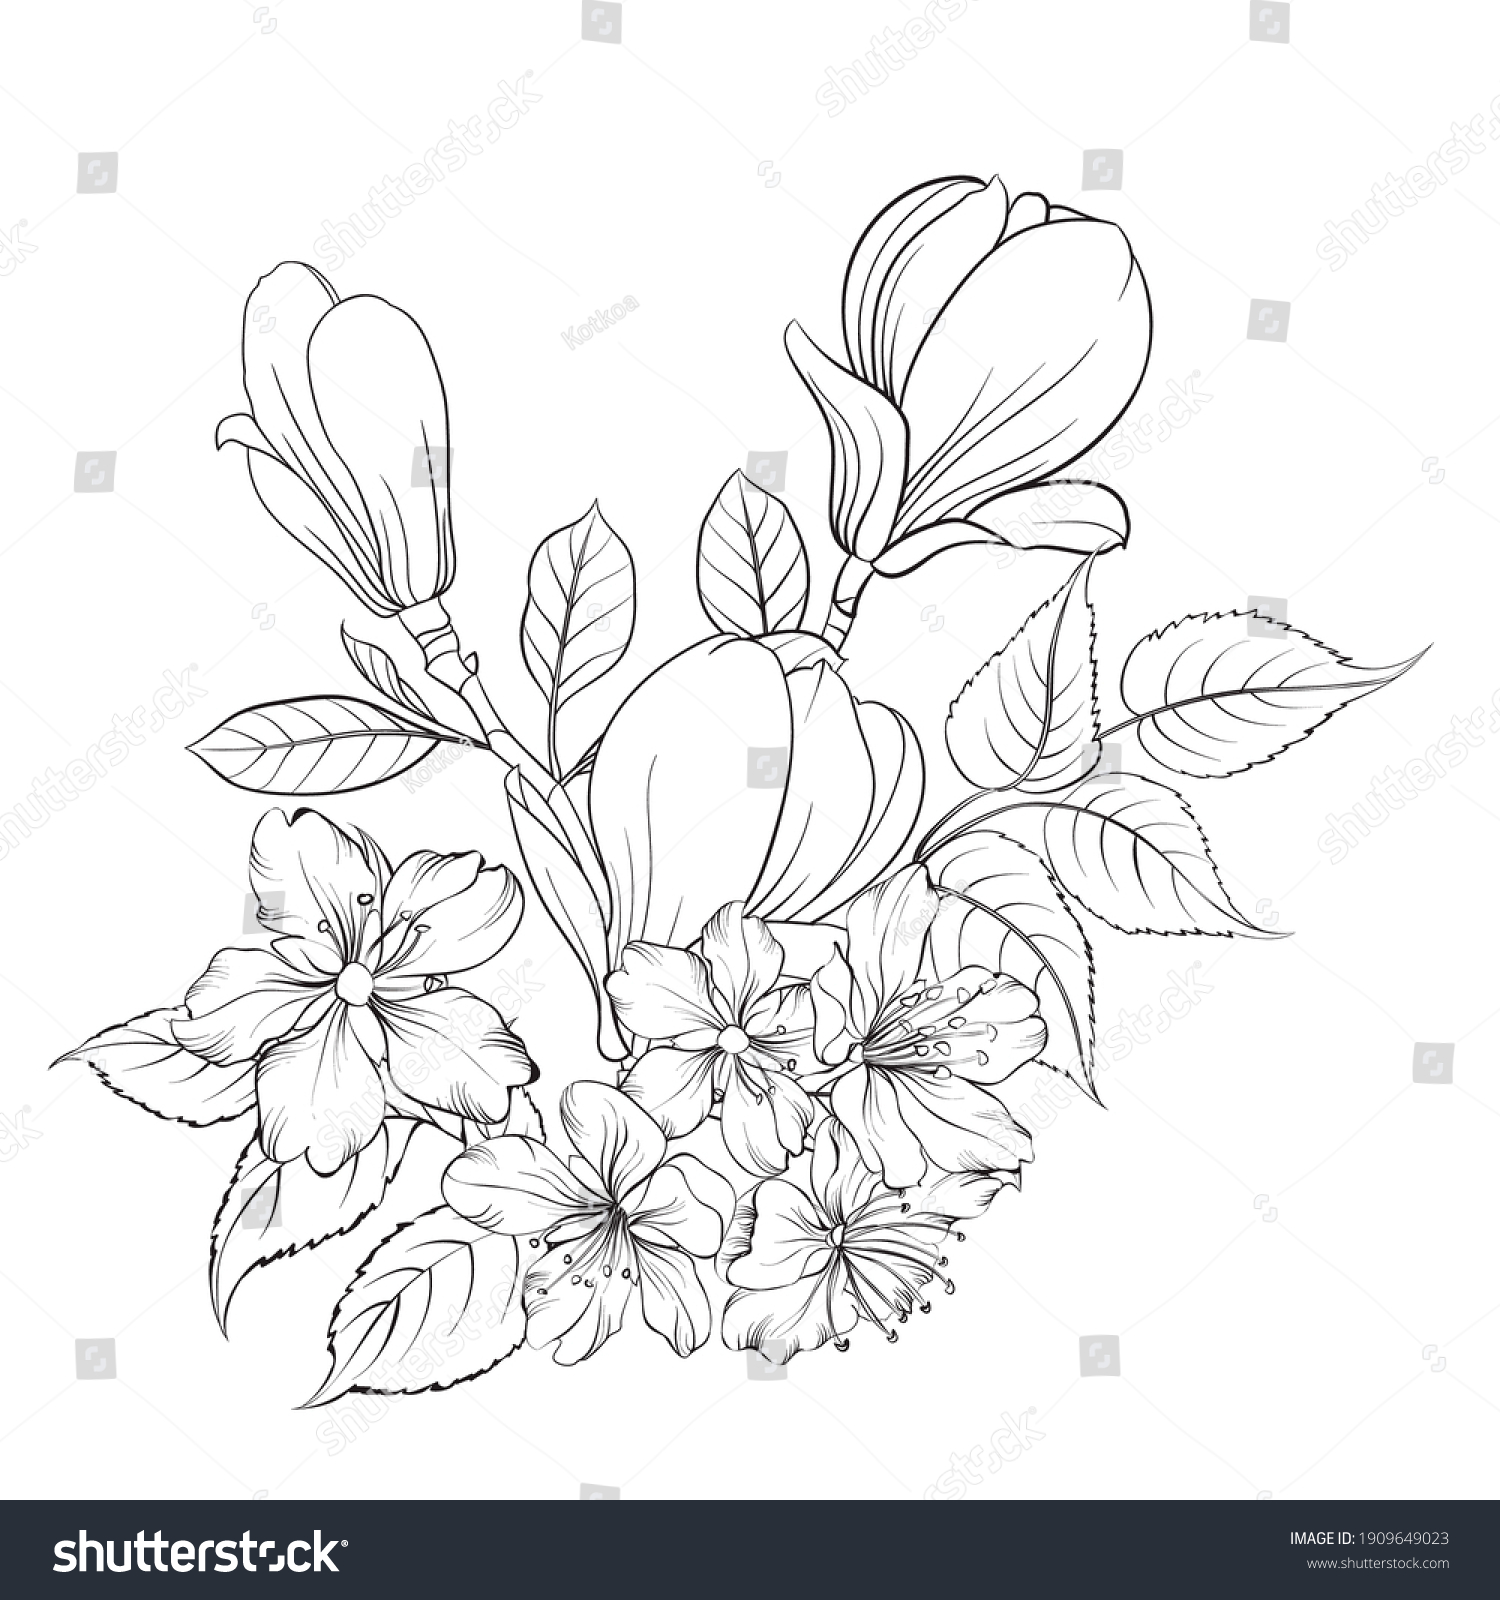 Black white magnolia Images, Stock Photos & Vectors | Shutterstock